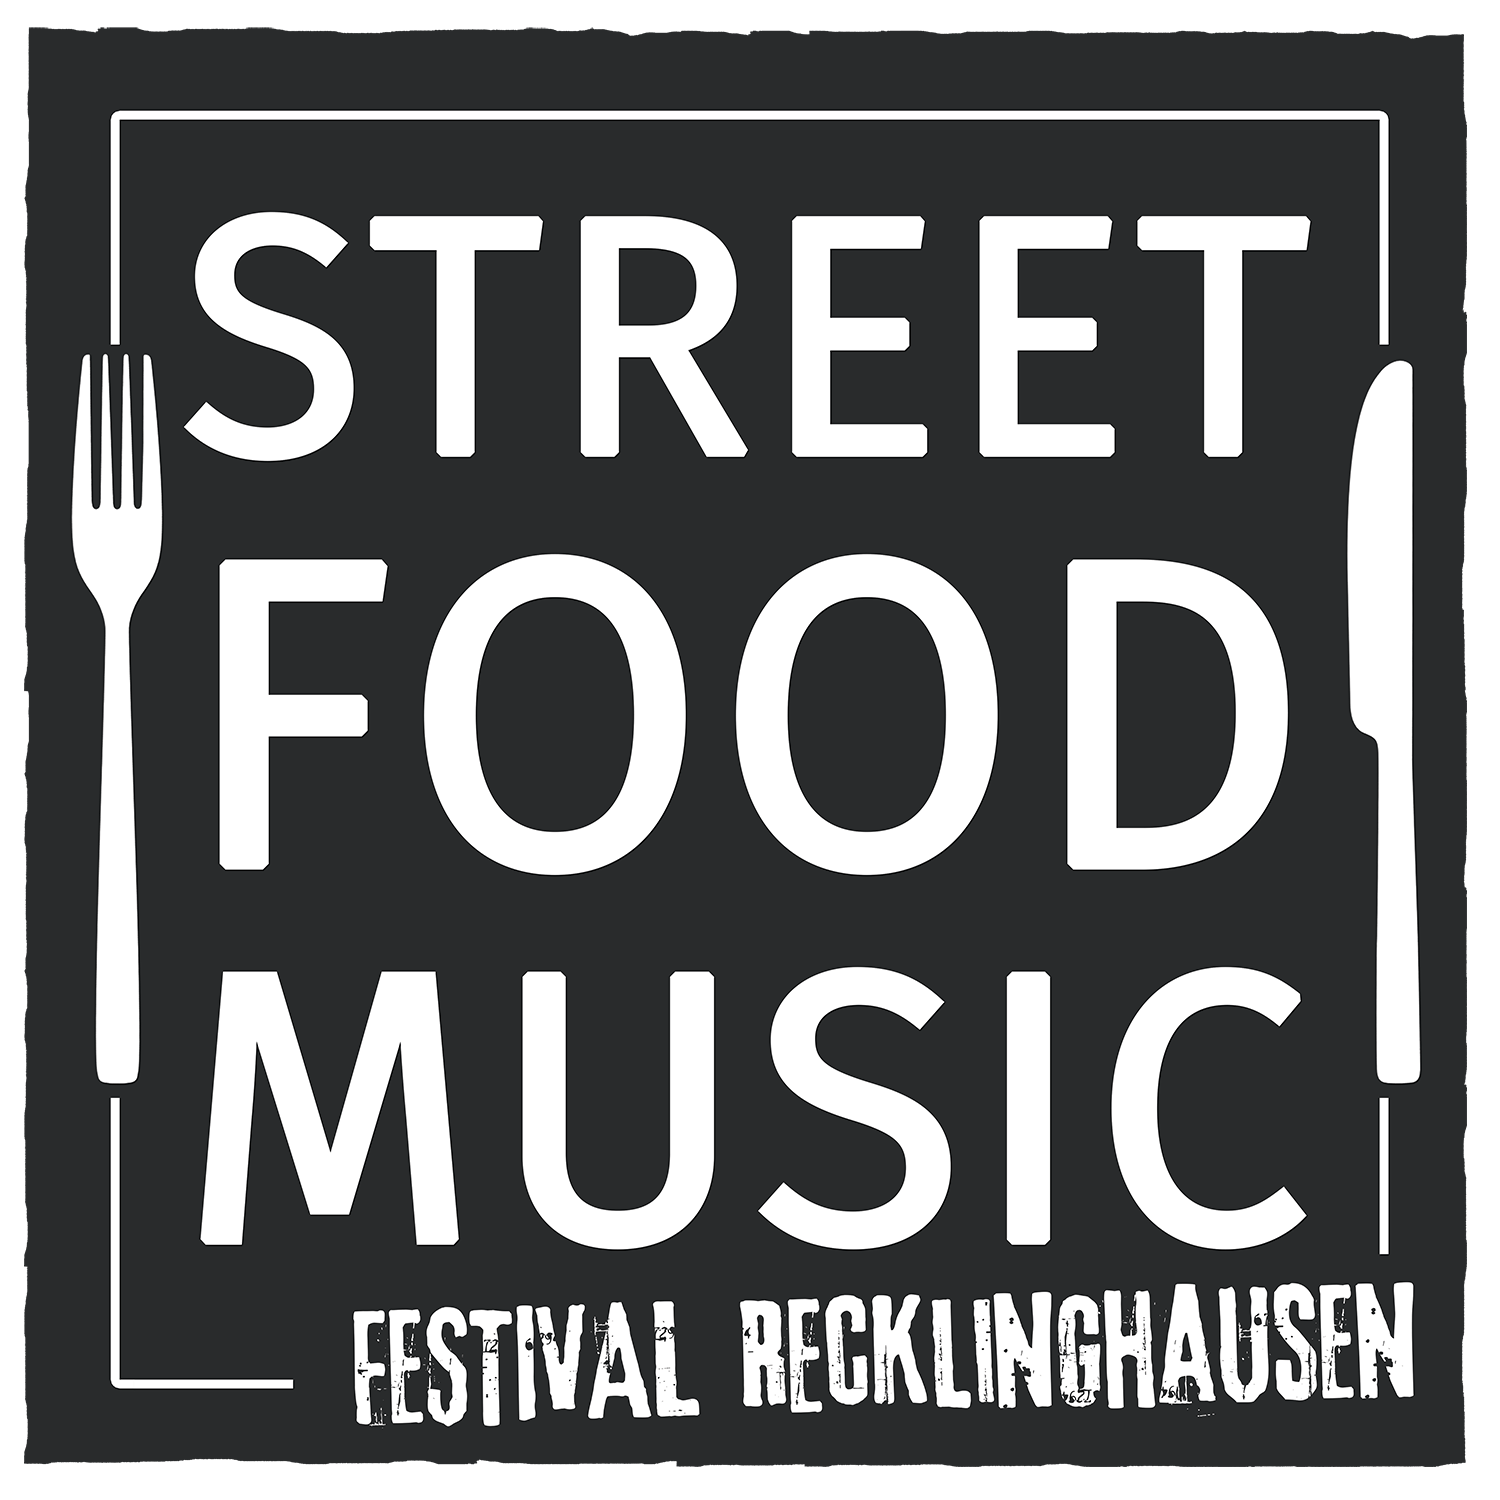 Street Food & Music Festival Recklinghausen